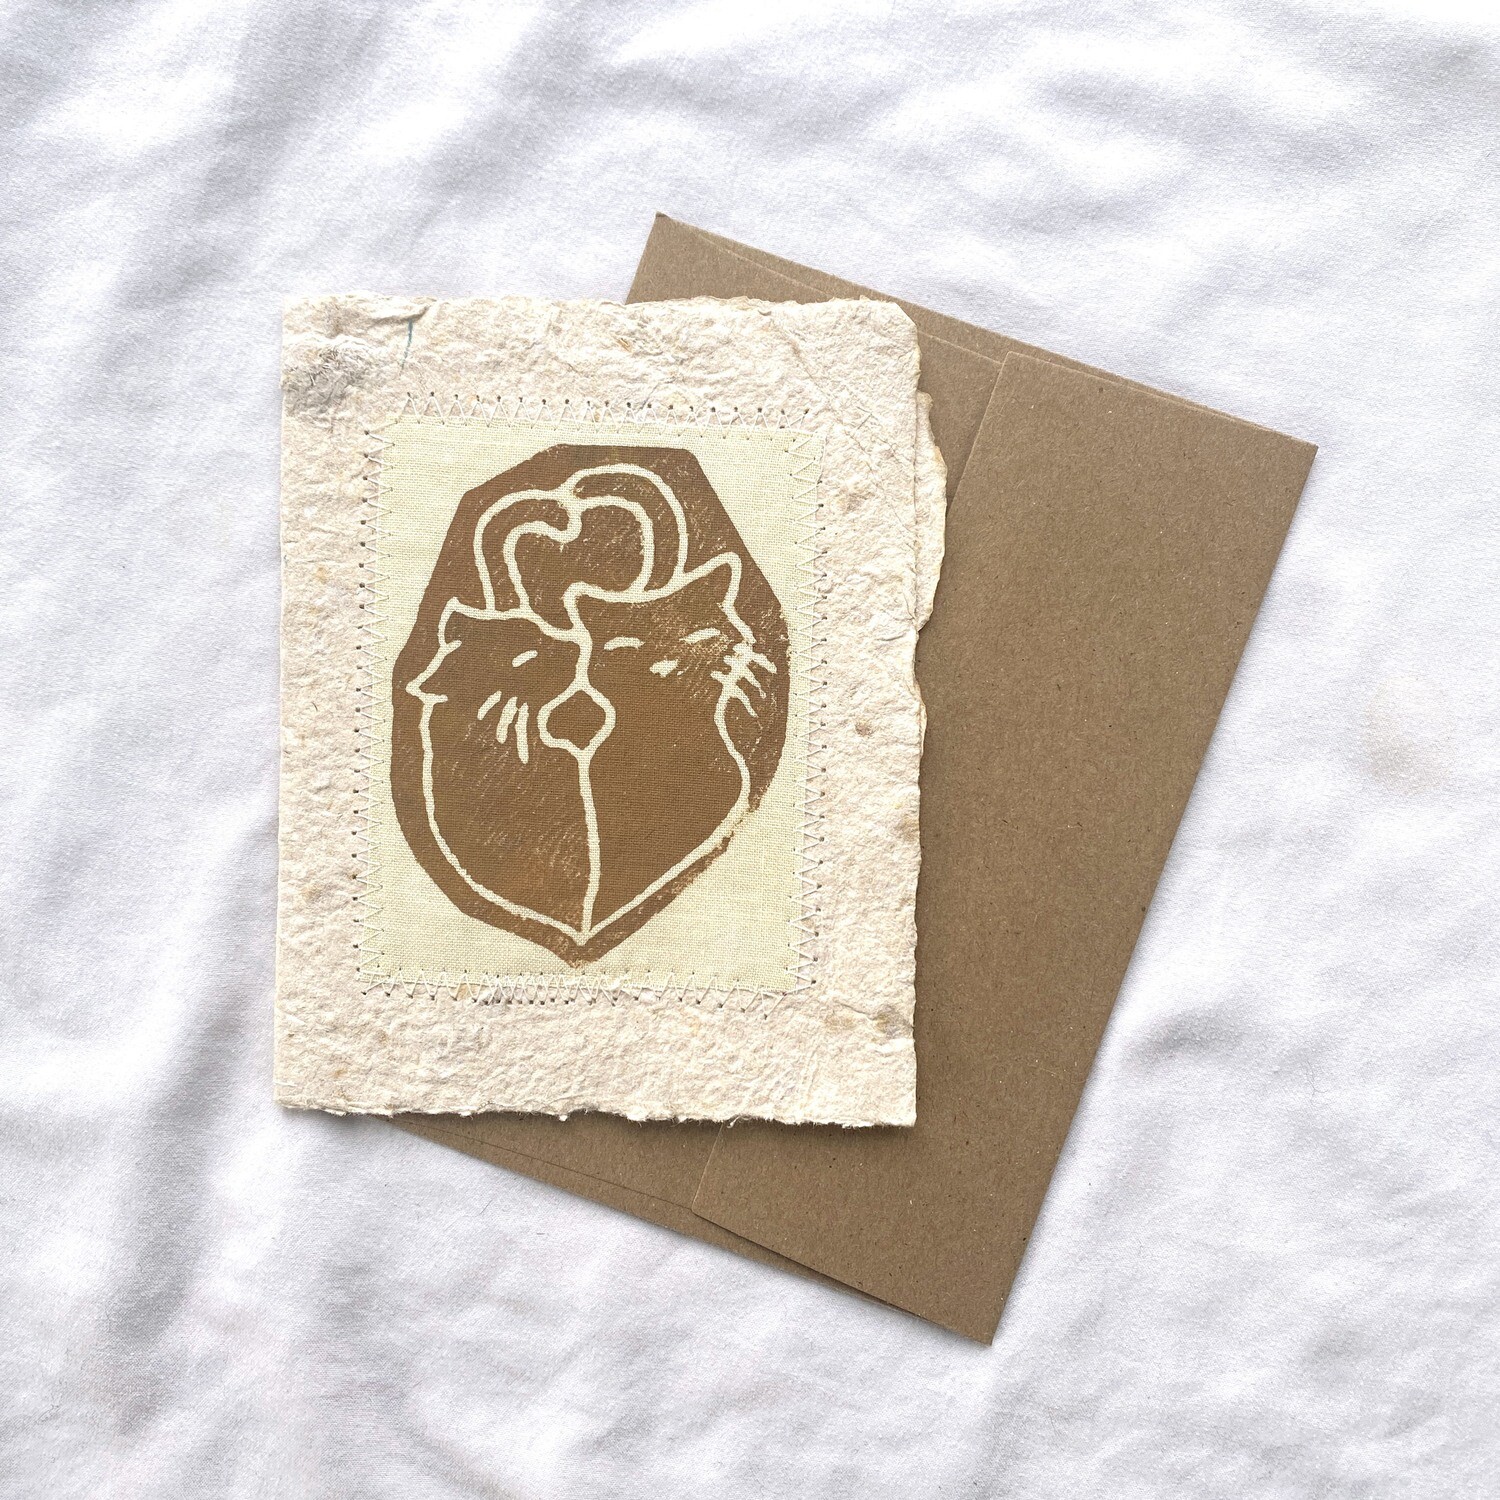 Greeting Card, Hand Pressed Paper, Original Hand Pressed Print, Sewn, 4.5" x 6"